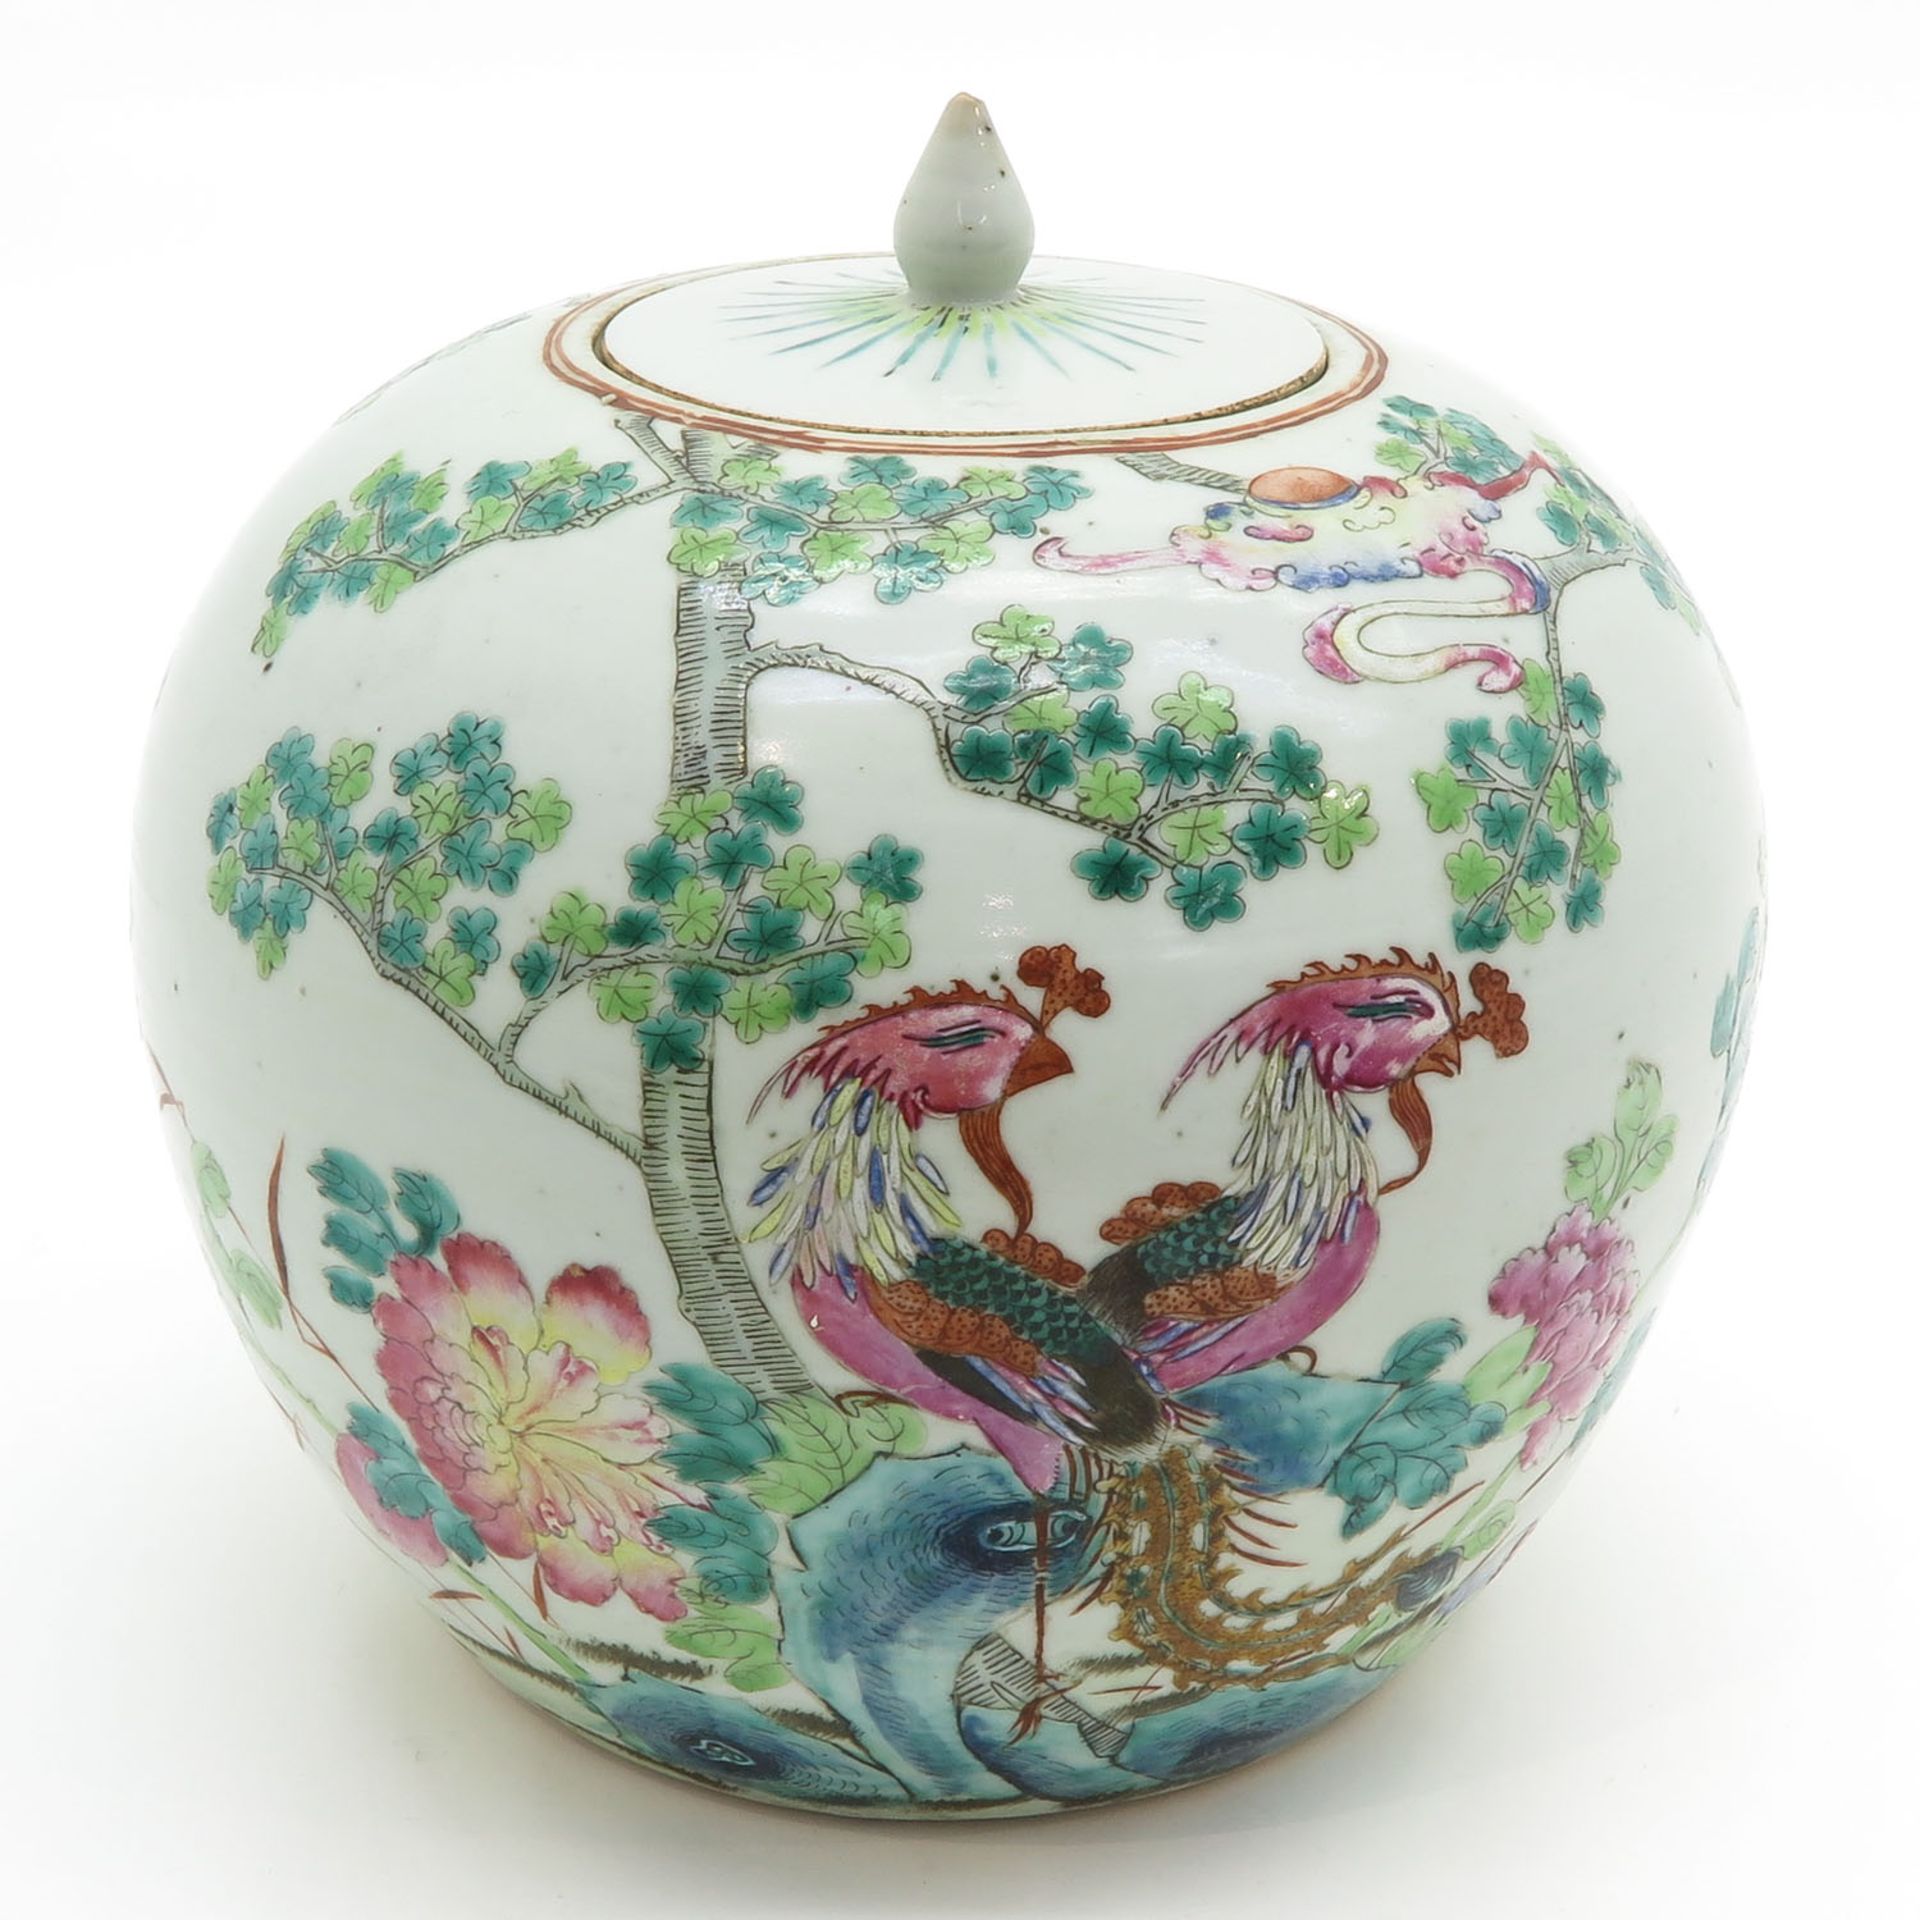 China Porcelain Covered Vase